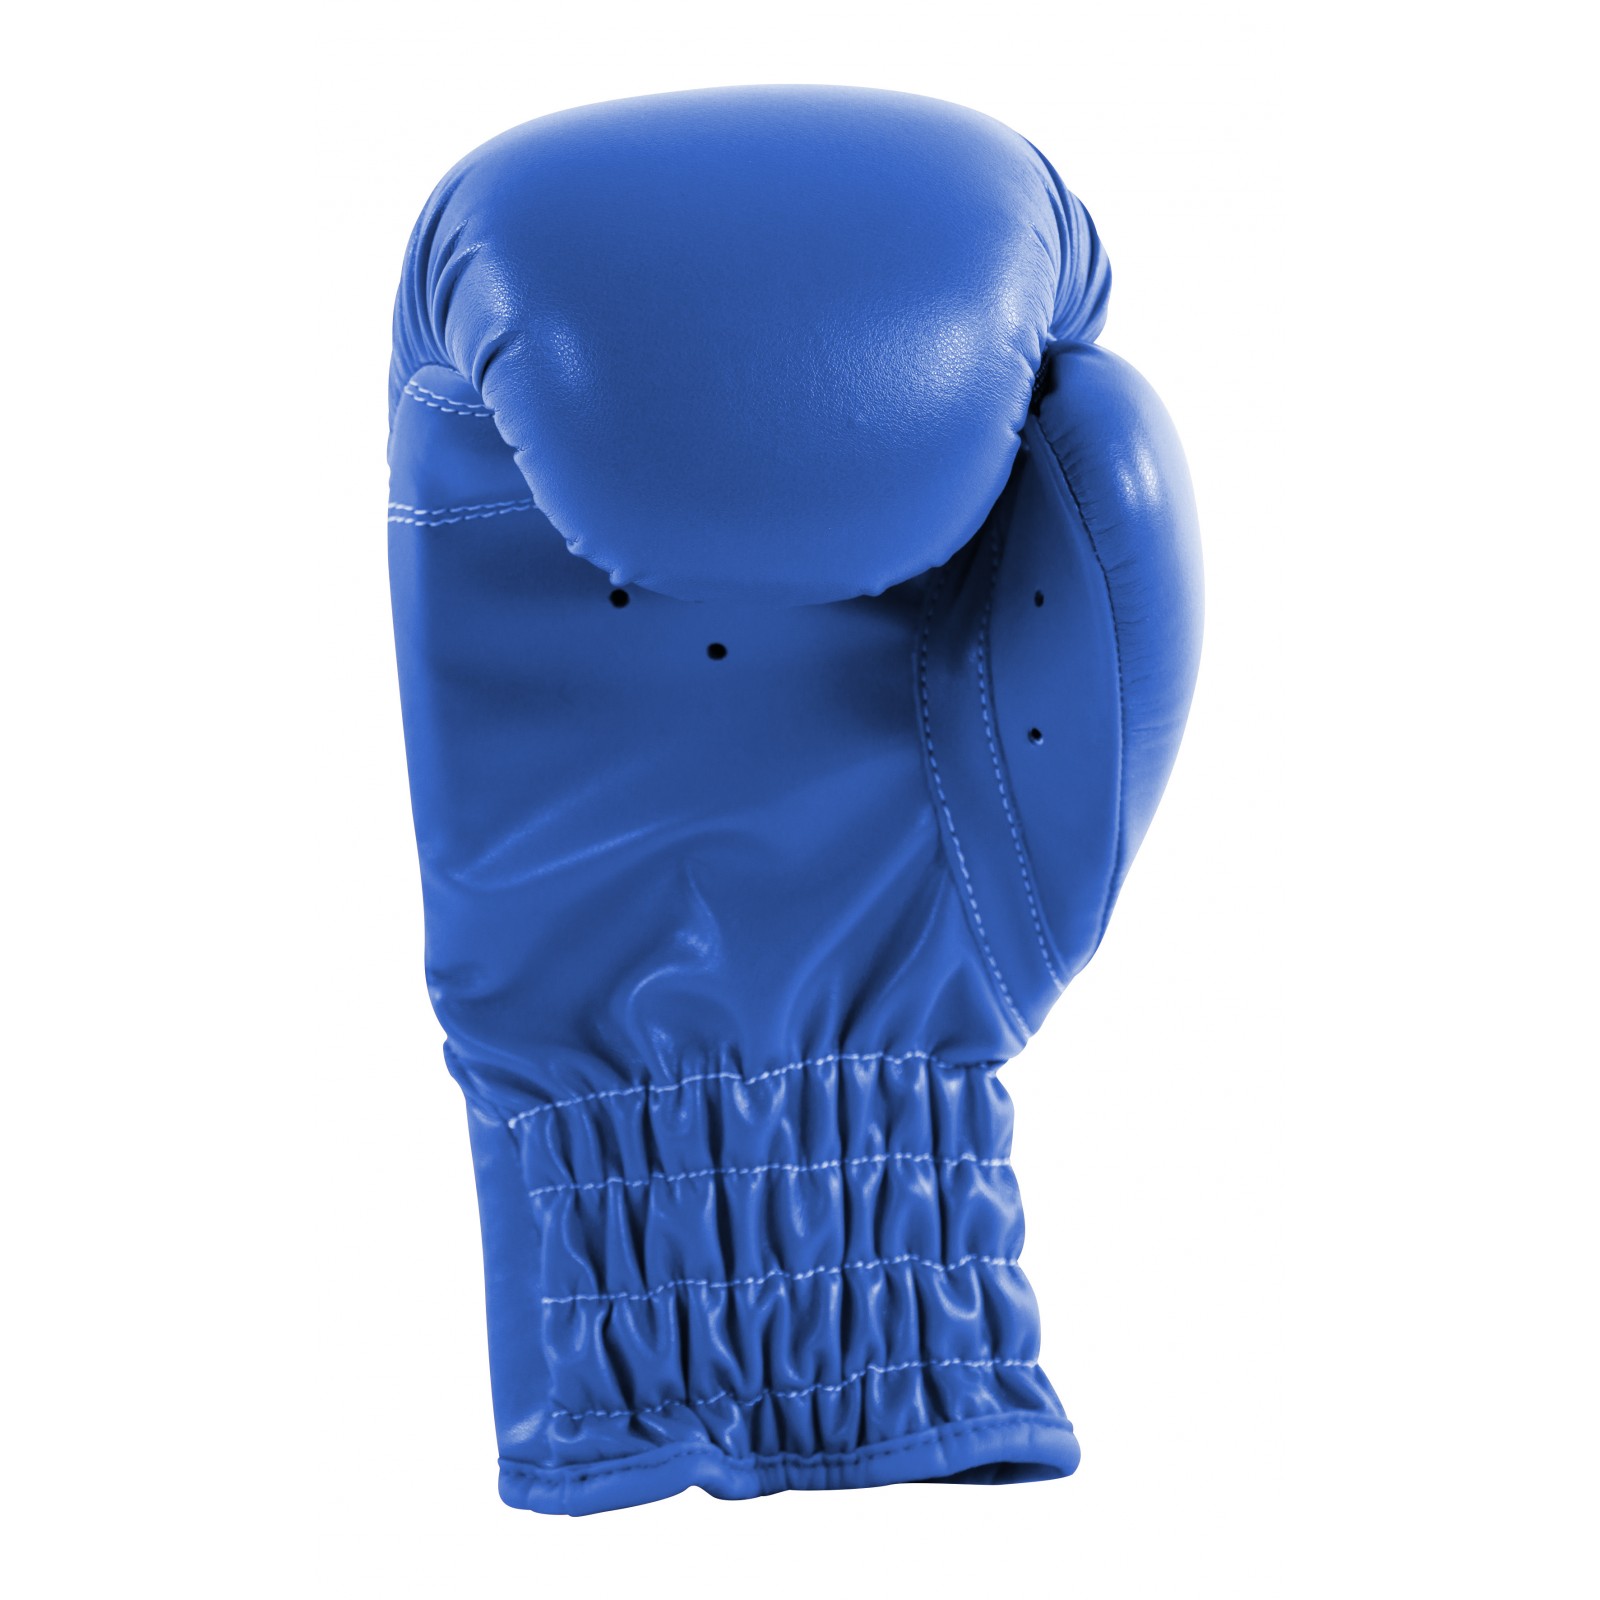 Adidas boxing glove - Rookie-2 Fitshop